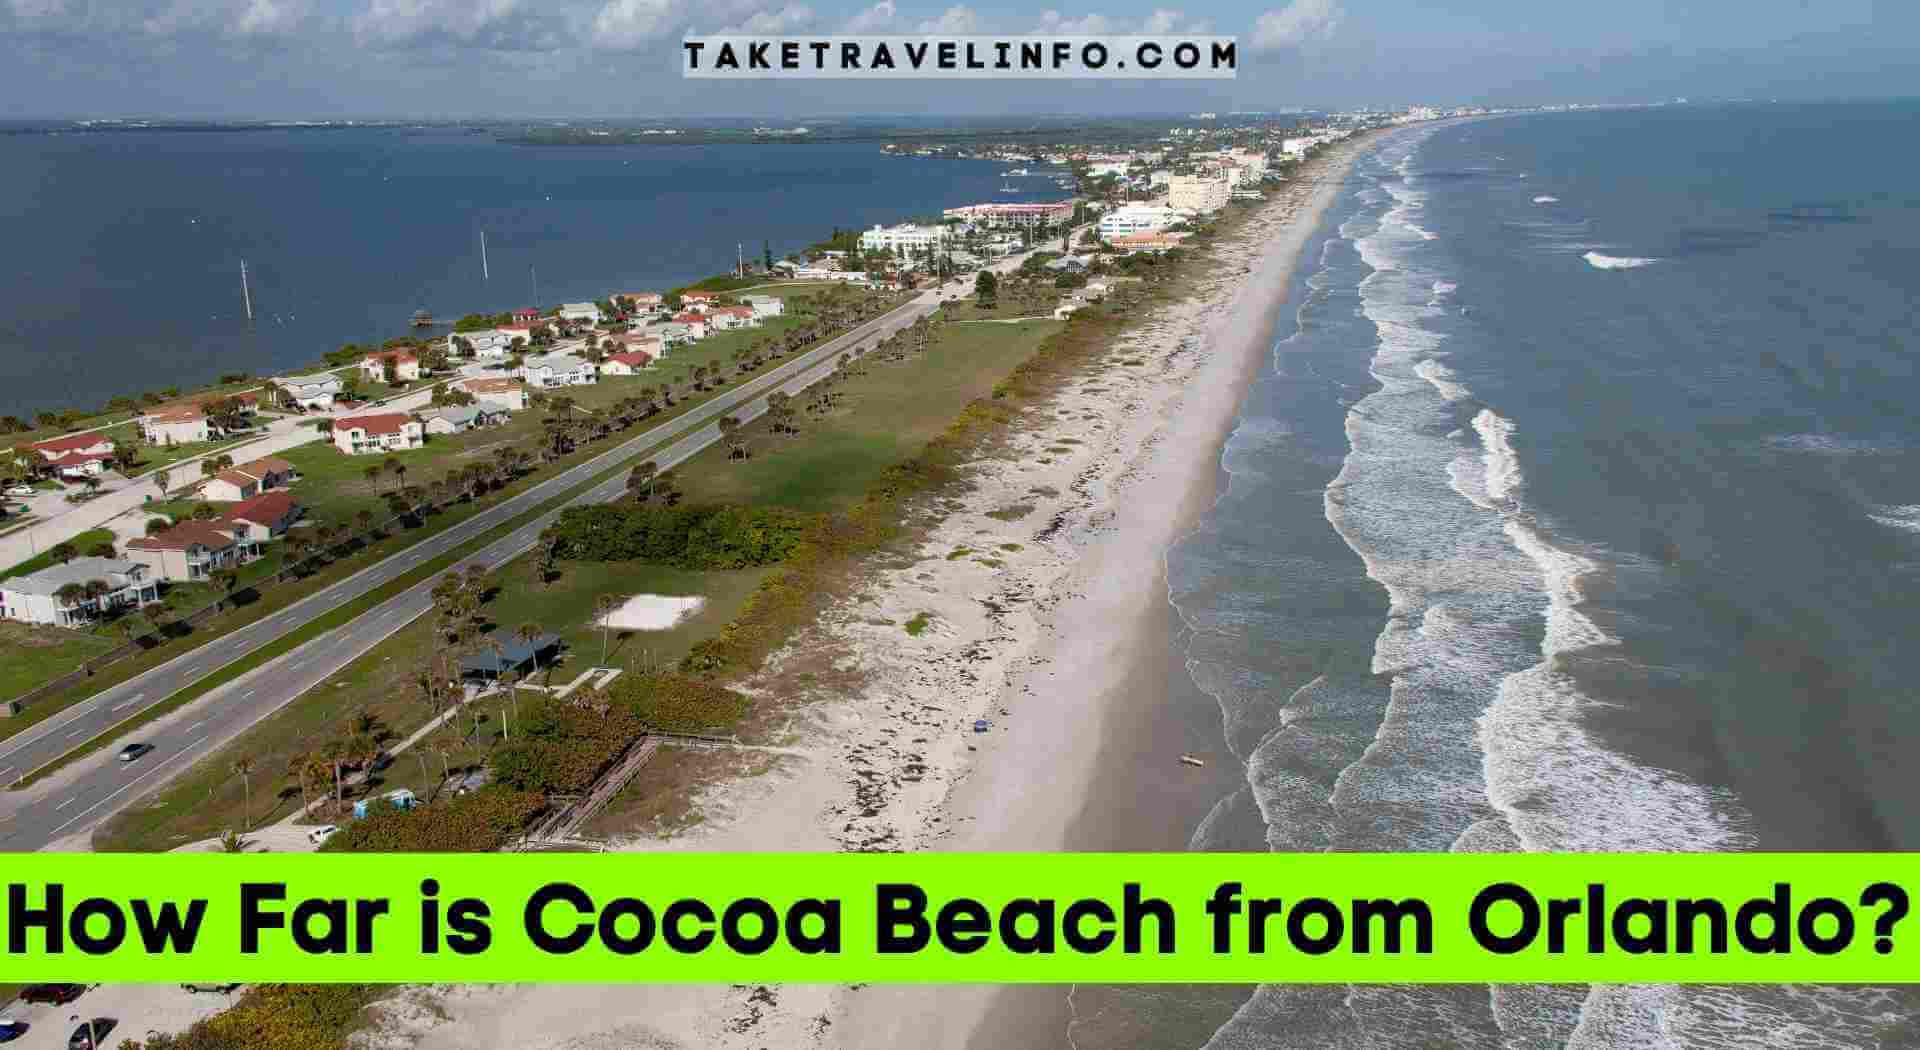 How Far is Cocoa Beach from Orlando?